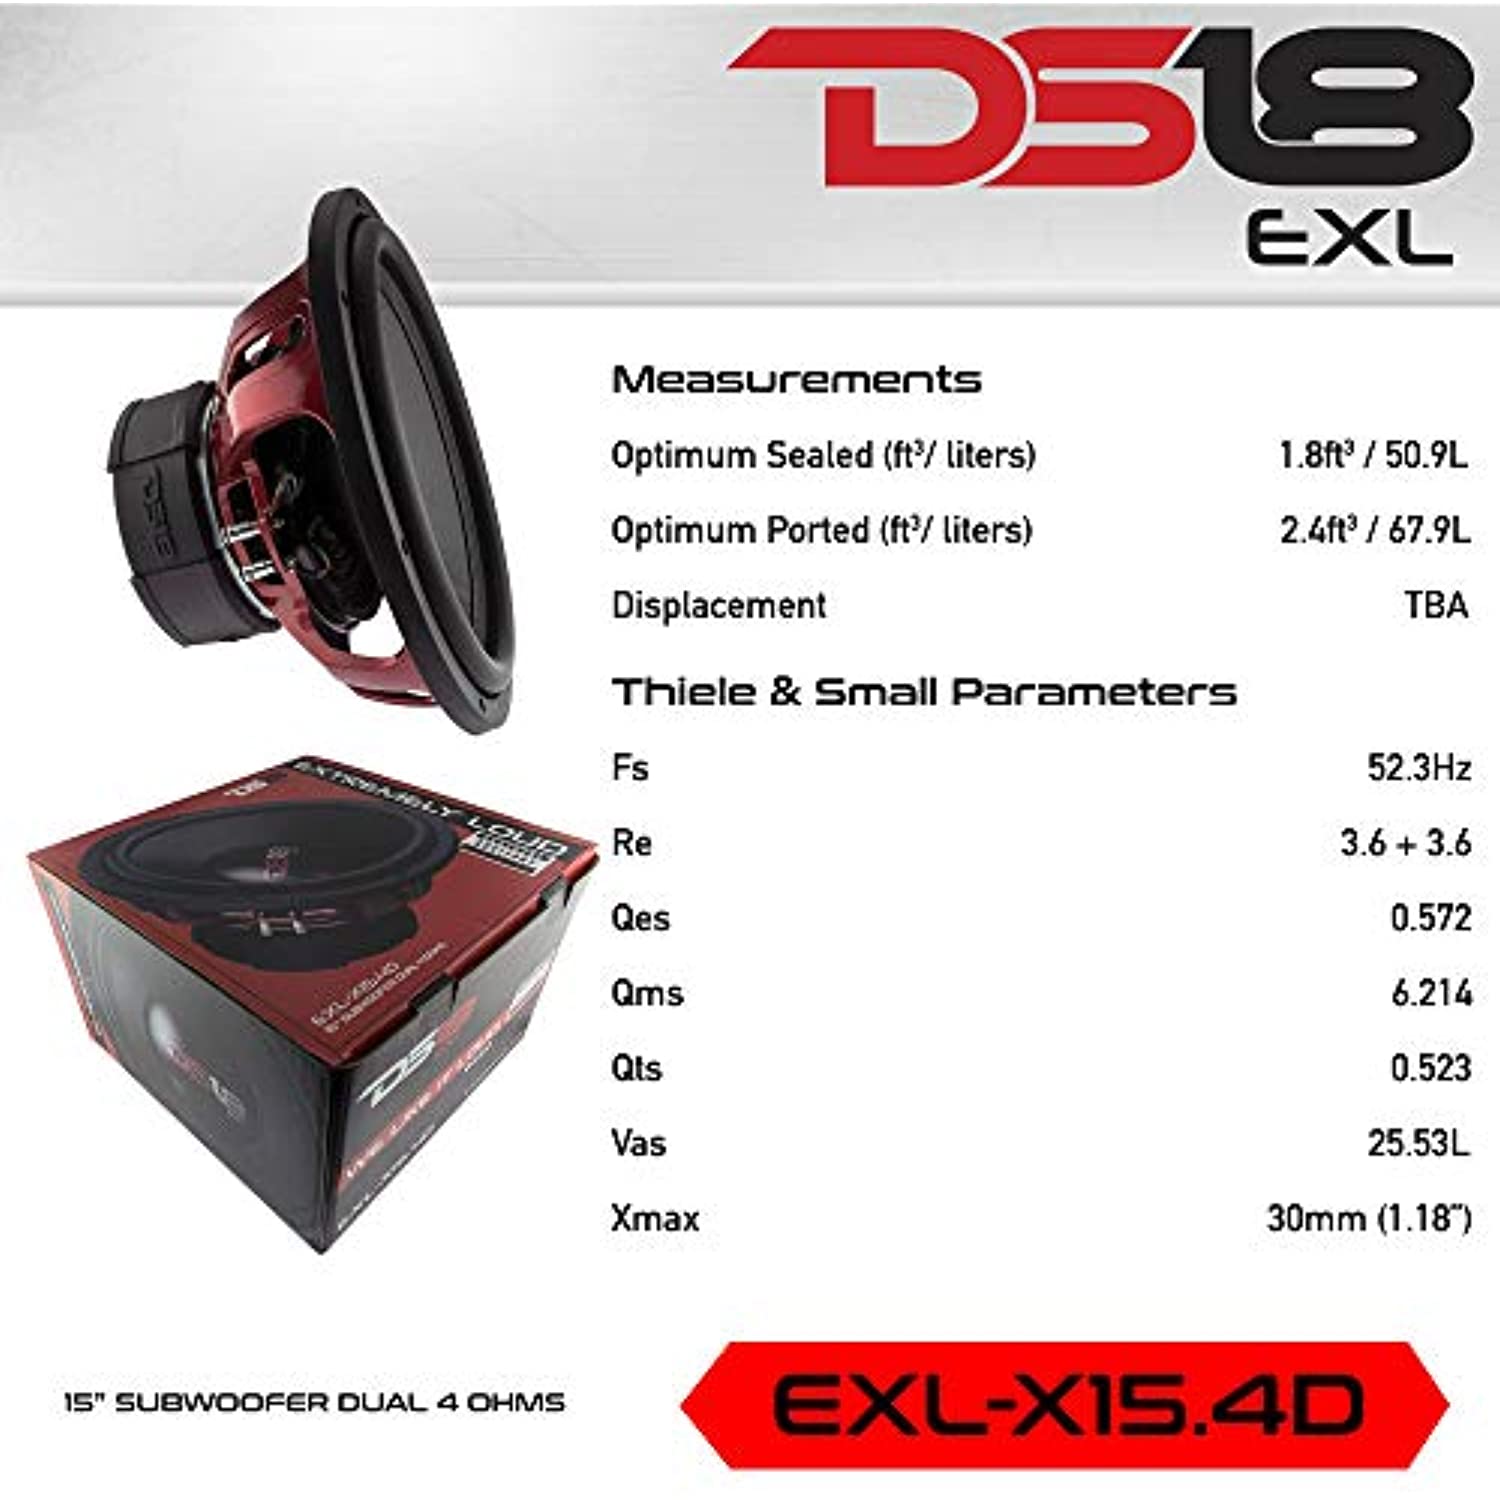 DS18 EXL-X15.4D Subwoofer in Black - 15" Speaker, 2,500 Max Power, 1,250 RMS Power, Fiber Glass Dust Cap, Red Aluminum Frame, Dual Voice Coil 4+4 Ohm Impedance, Treated Rubber Edge (1 Speaker)